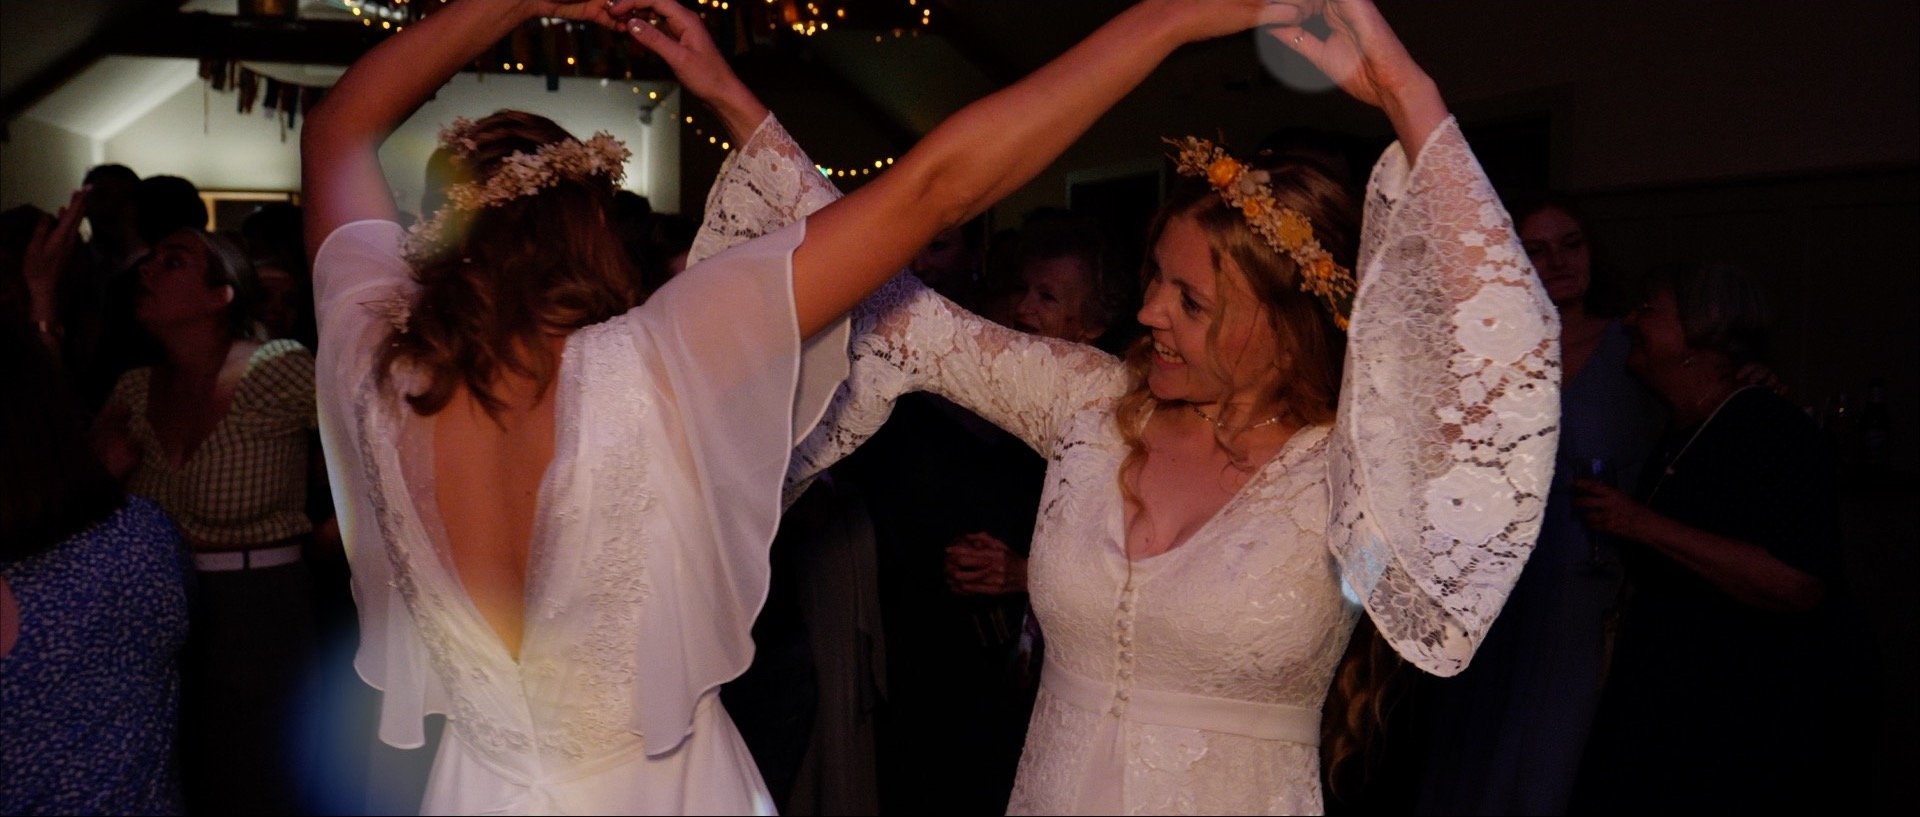 Apton Hall wedding party videos.jpg